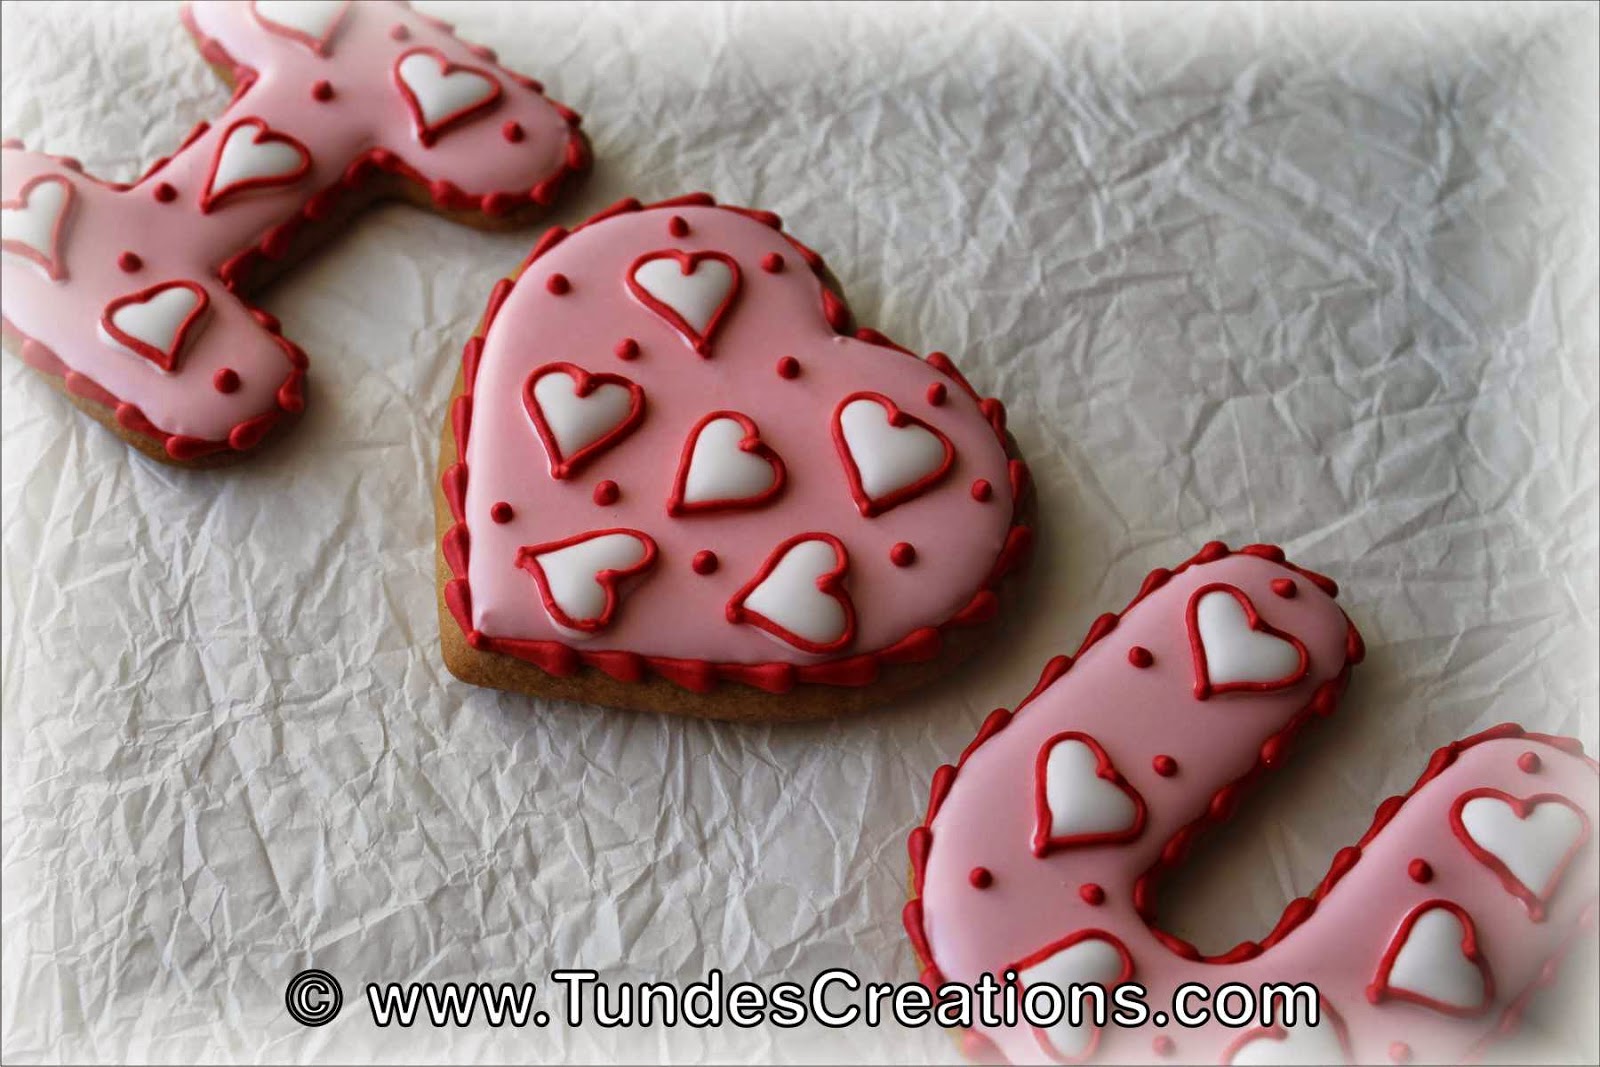 I heart U cookies